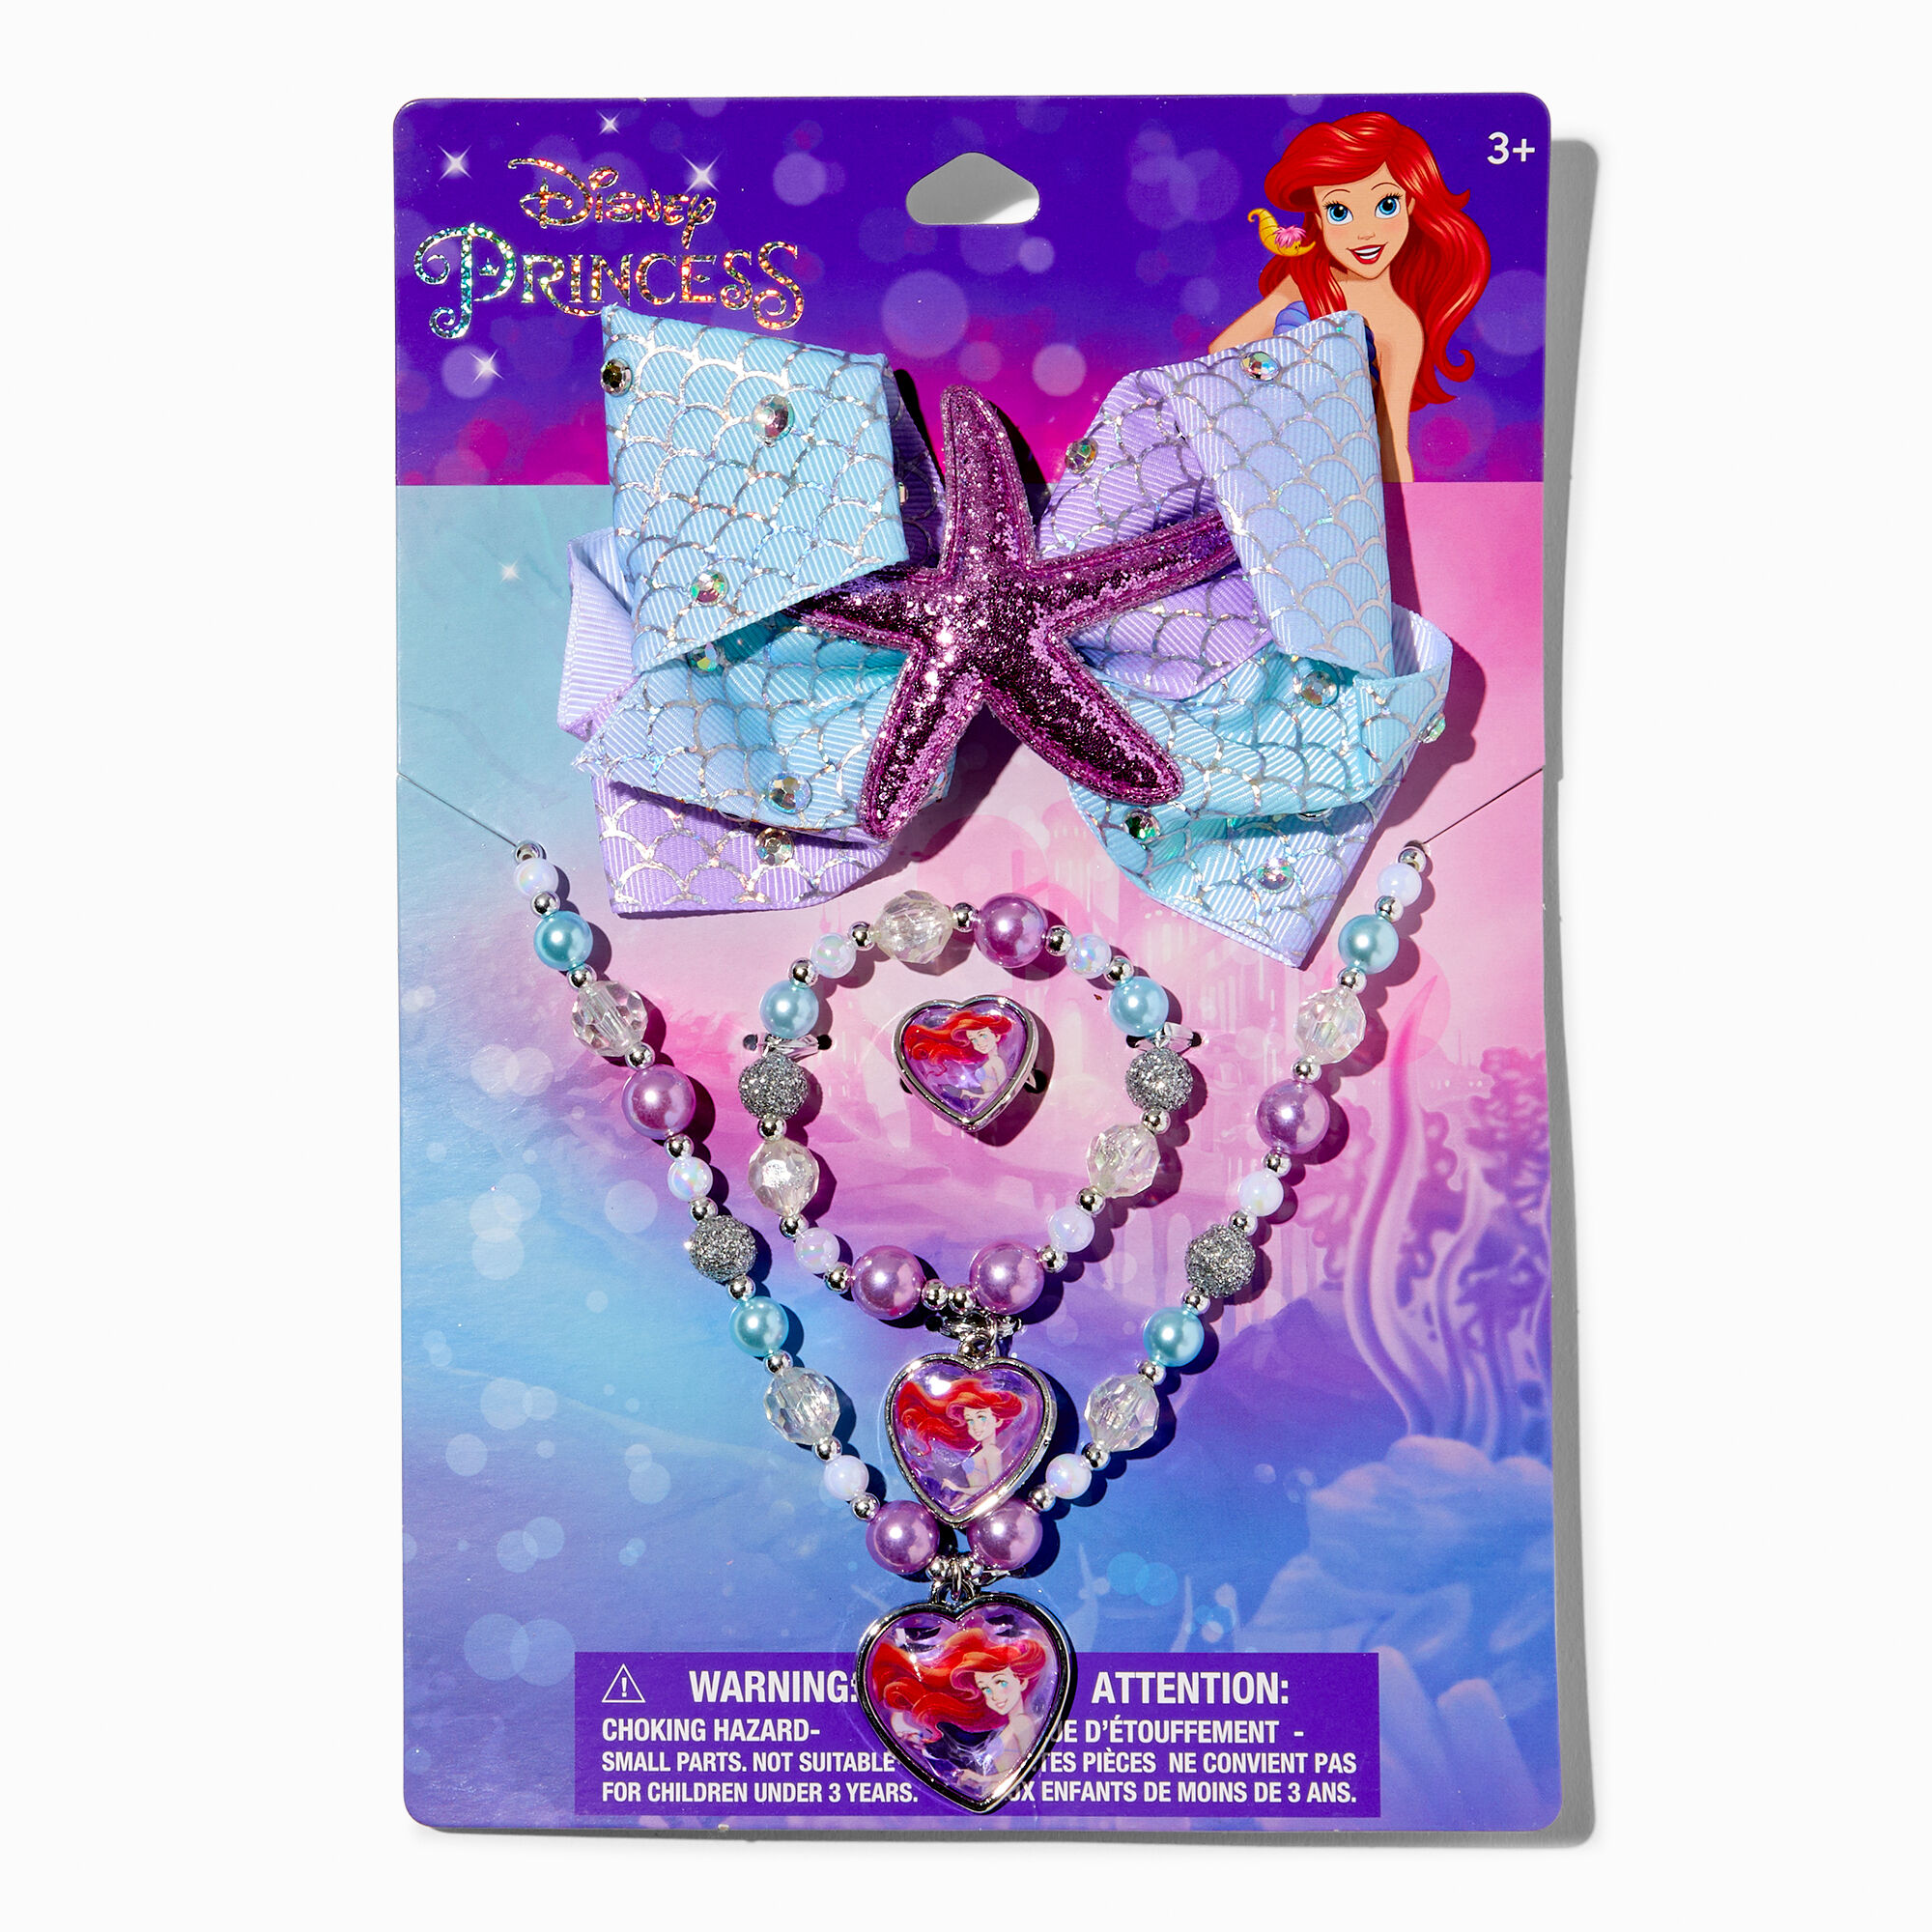 Mermaid Jewelry Set For Little Girls, Princess Mermaid Stretchy